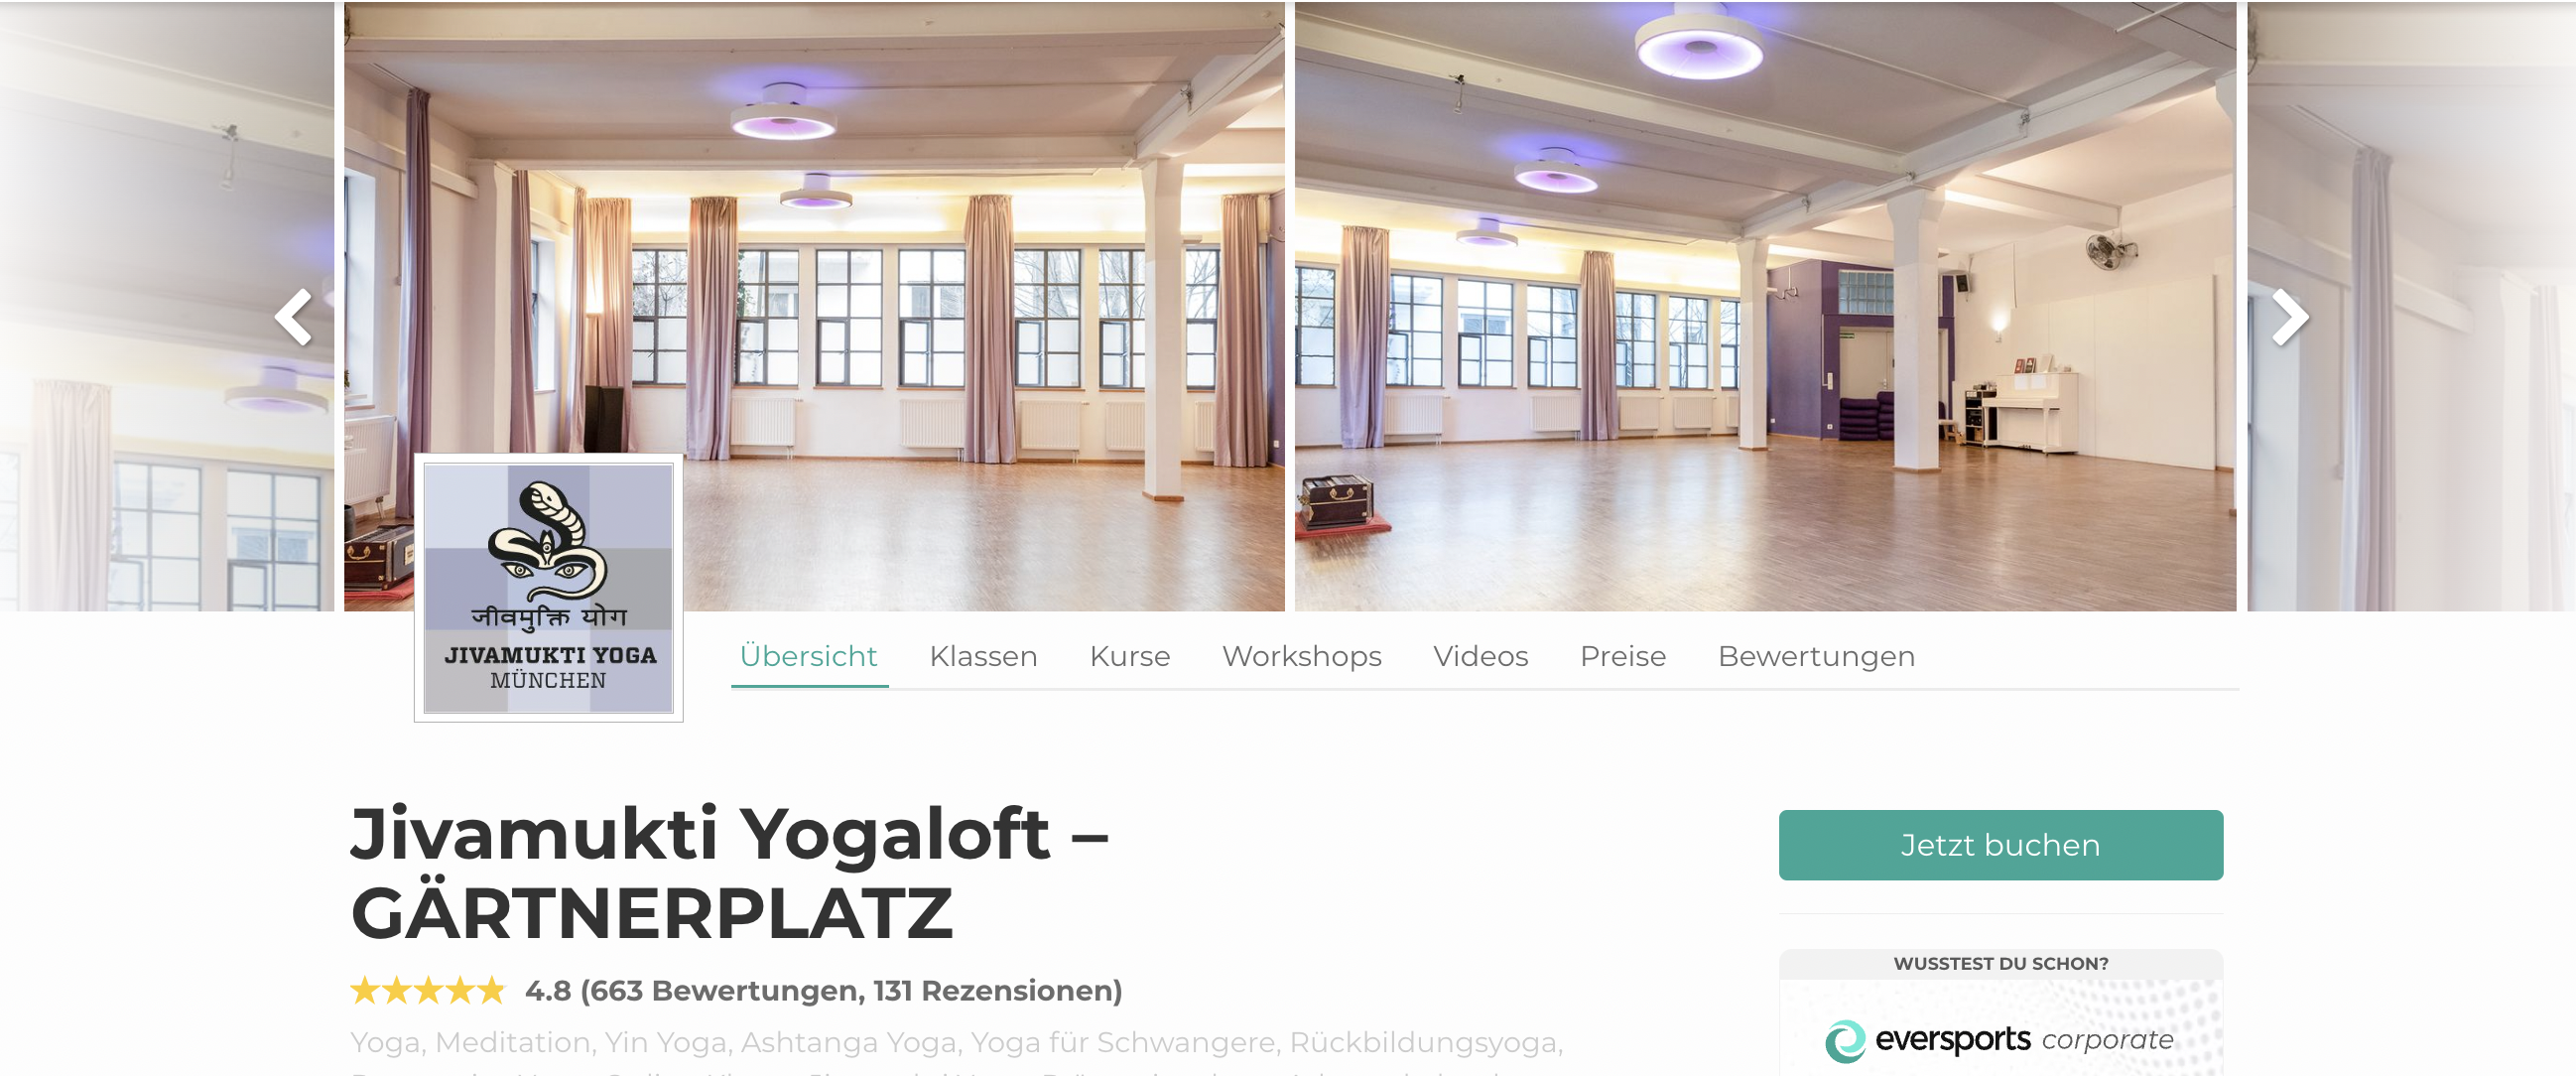 Jivamukti Yogaloft ist top Yoga Studio in München